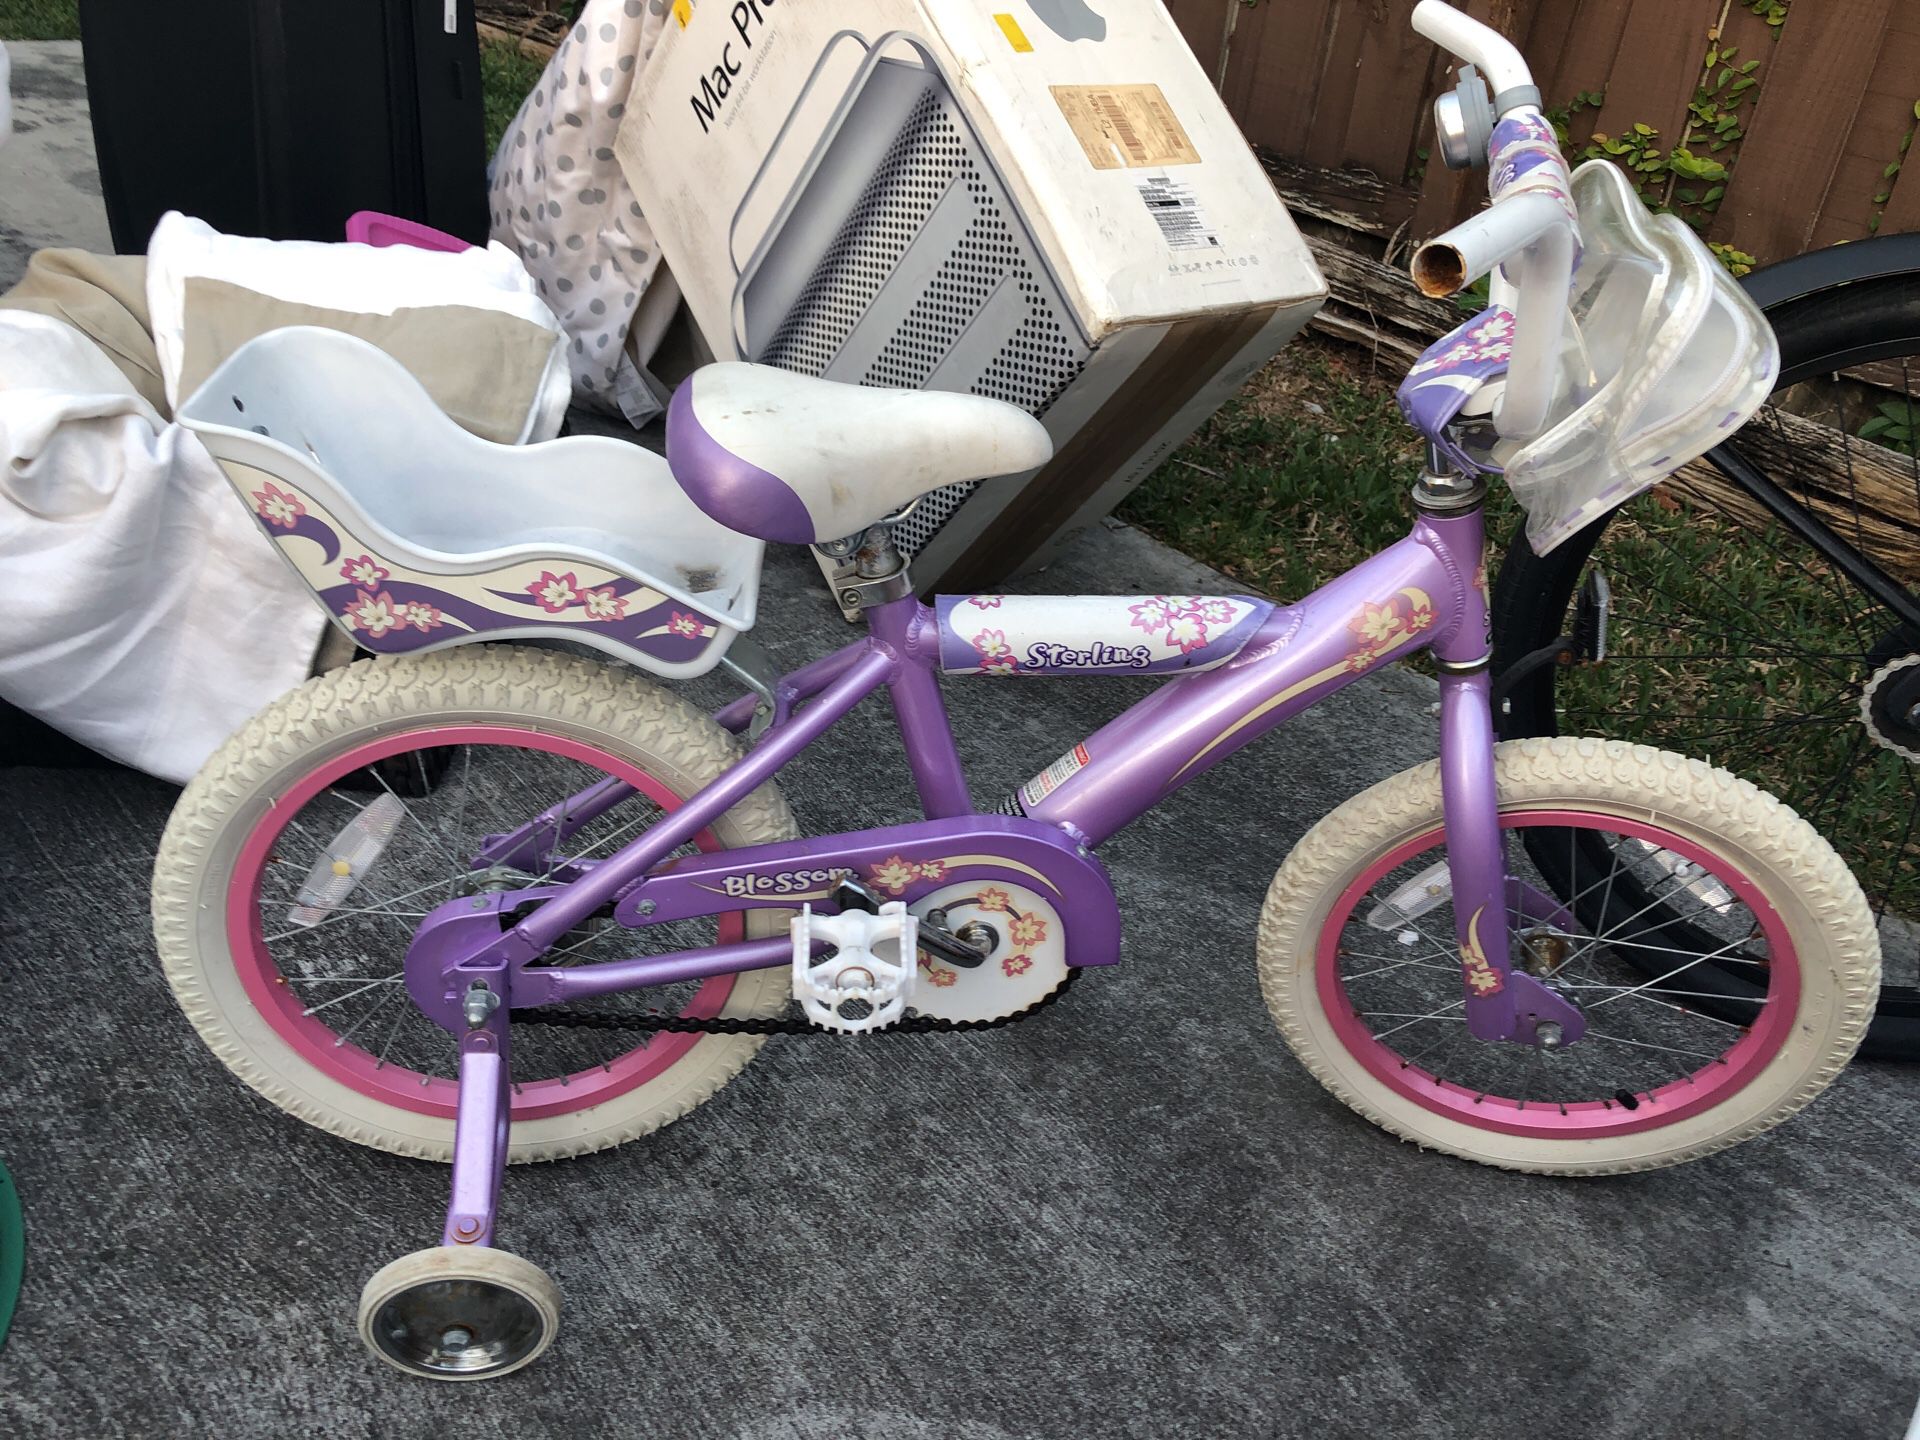 Girl’s bike